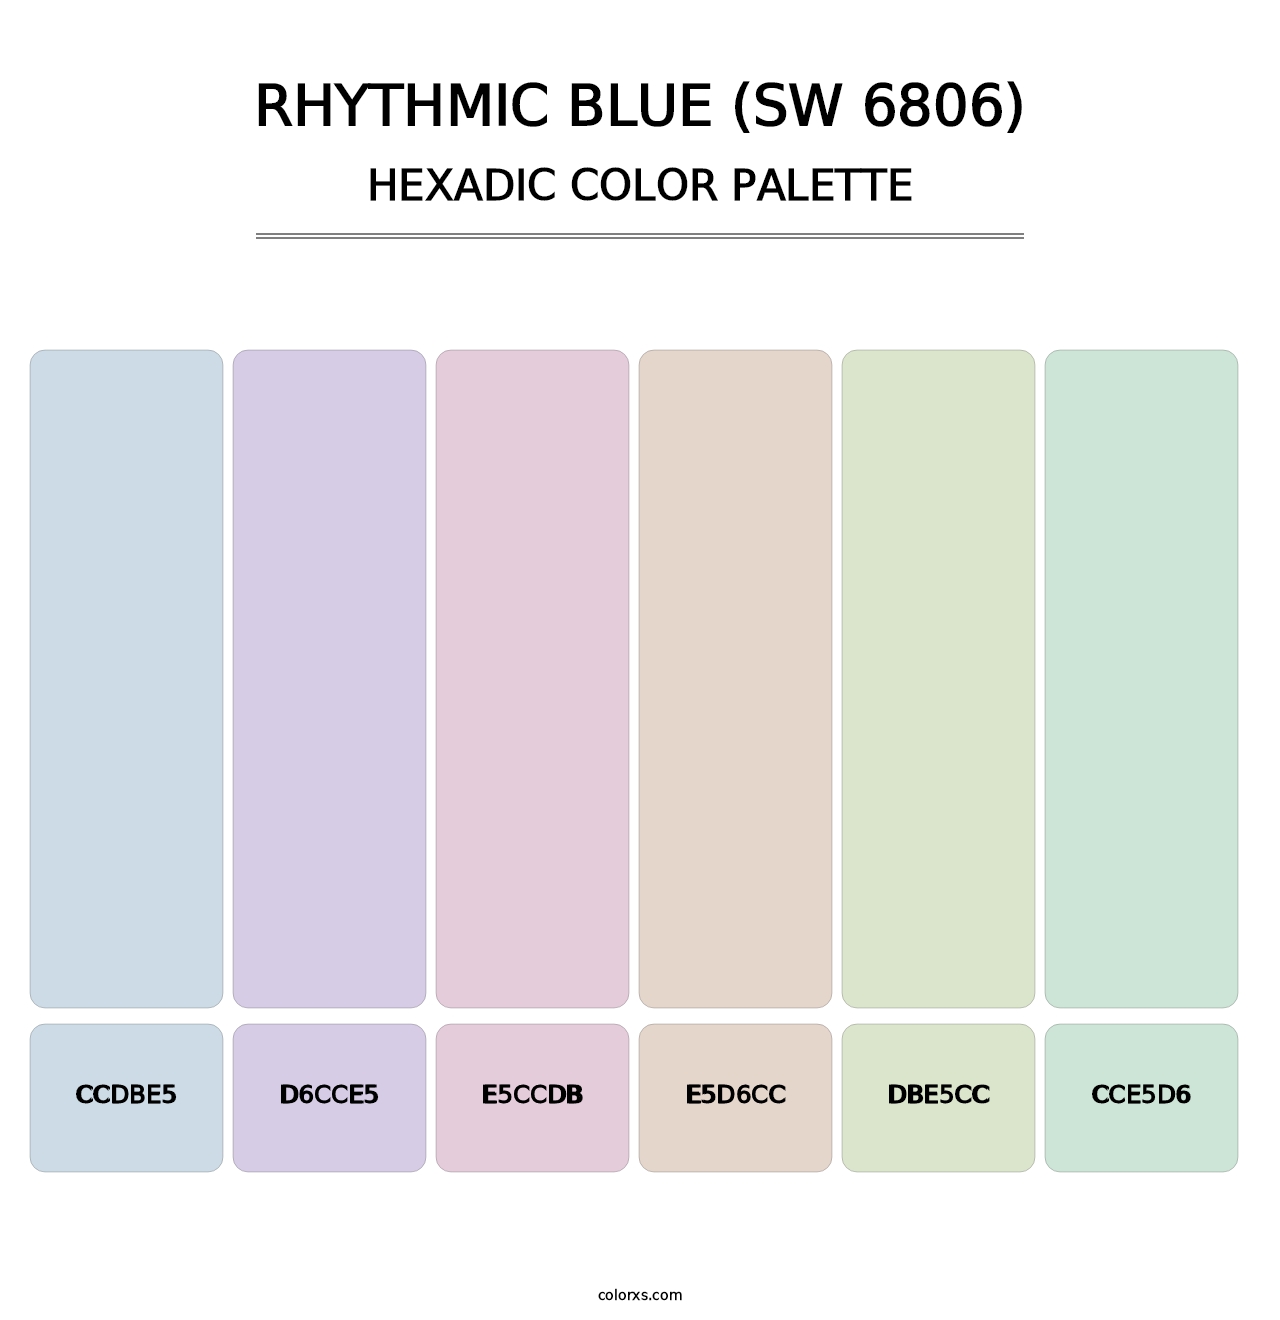 Rhythmic Blue (SW 6806) - Hexadic Color Palette